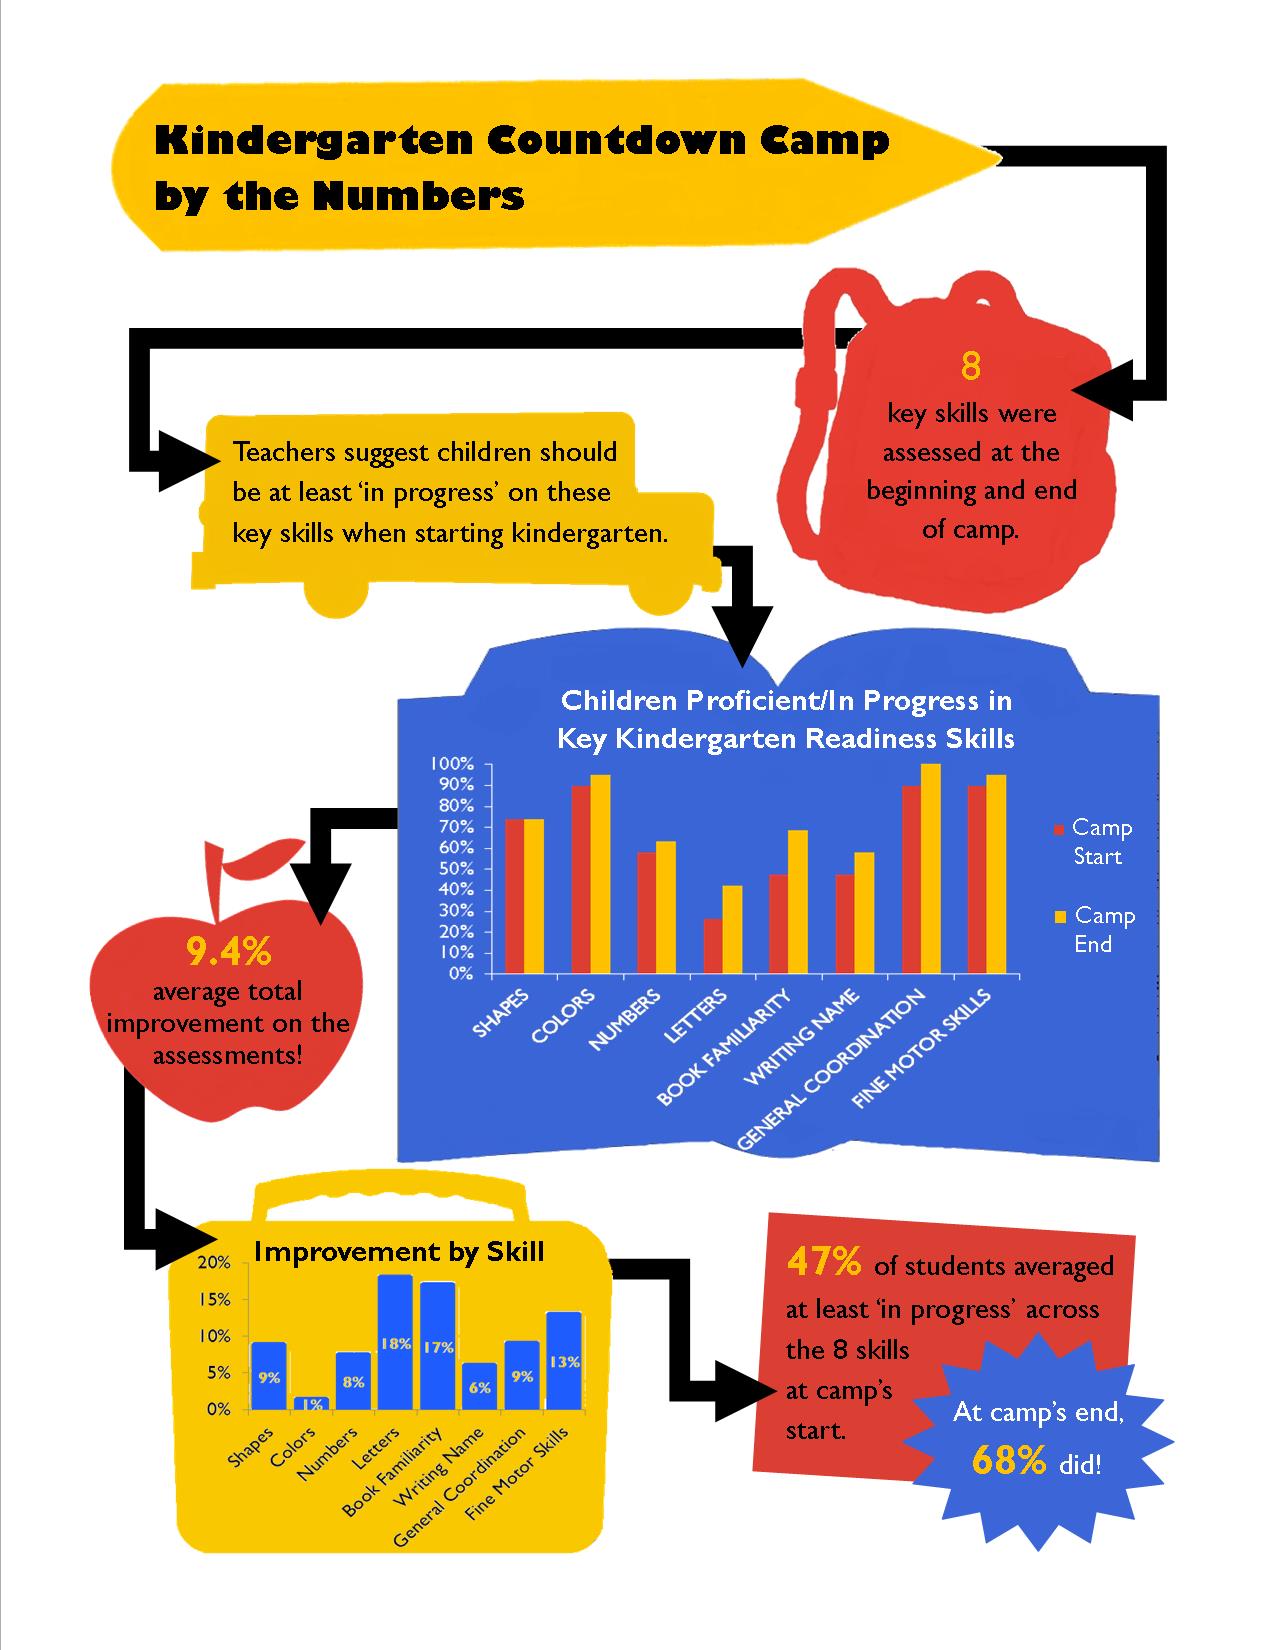 KCC 2015 Infographic